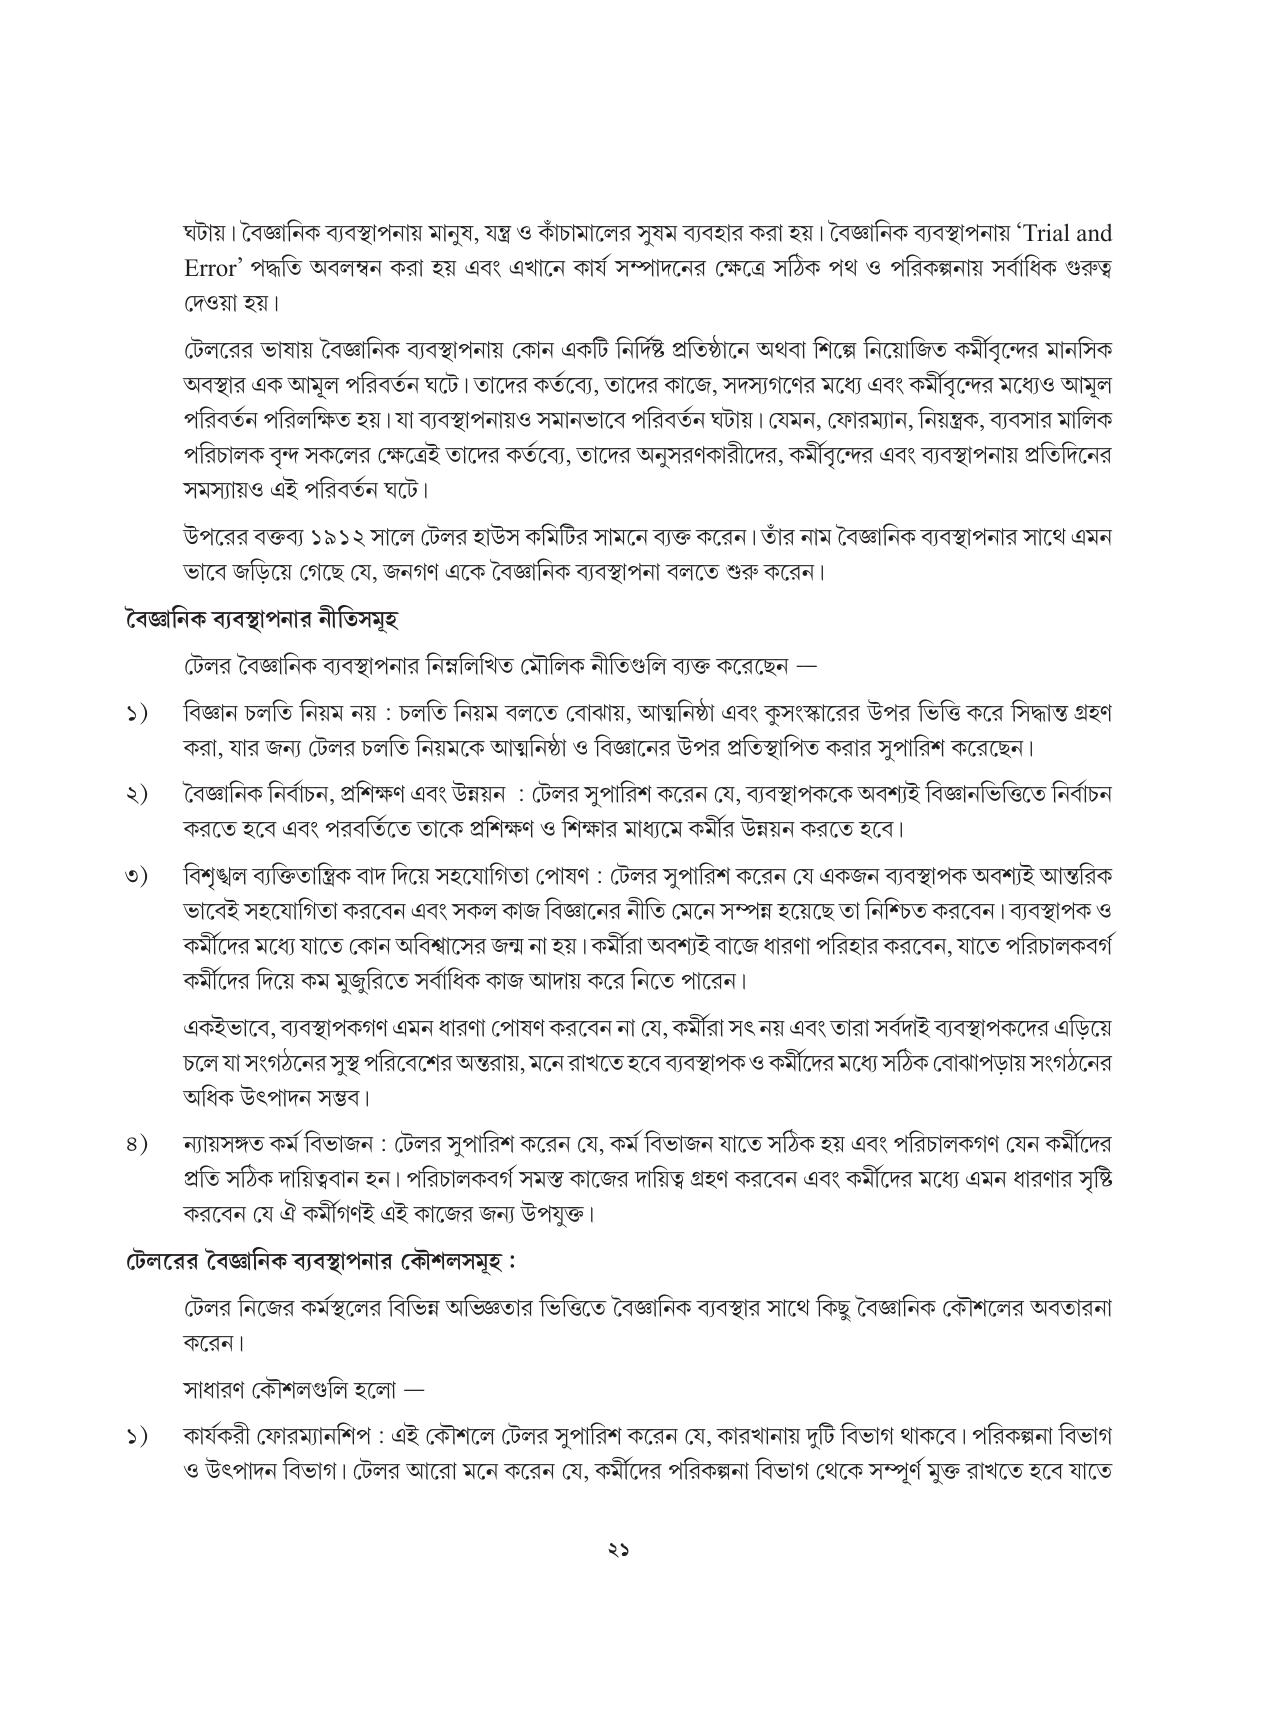 Tripura Board Class 12 Karbari Shastra Bengali Version Workbooks - Page 21